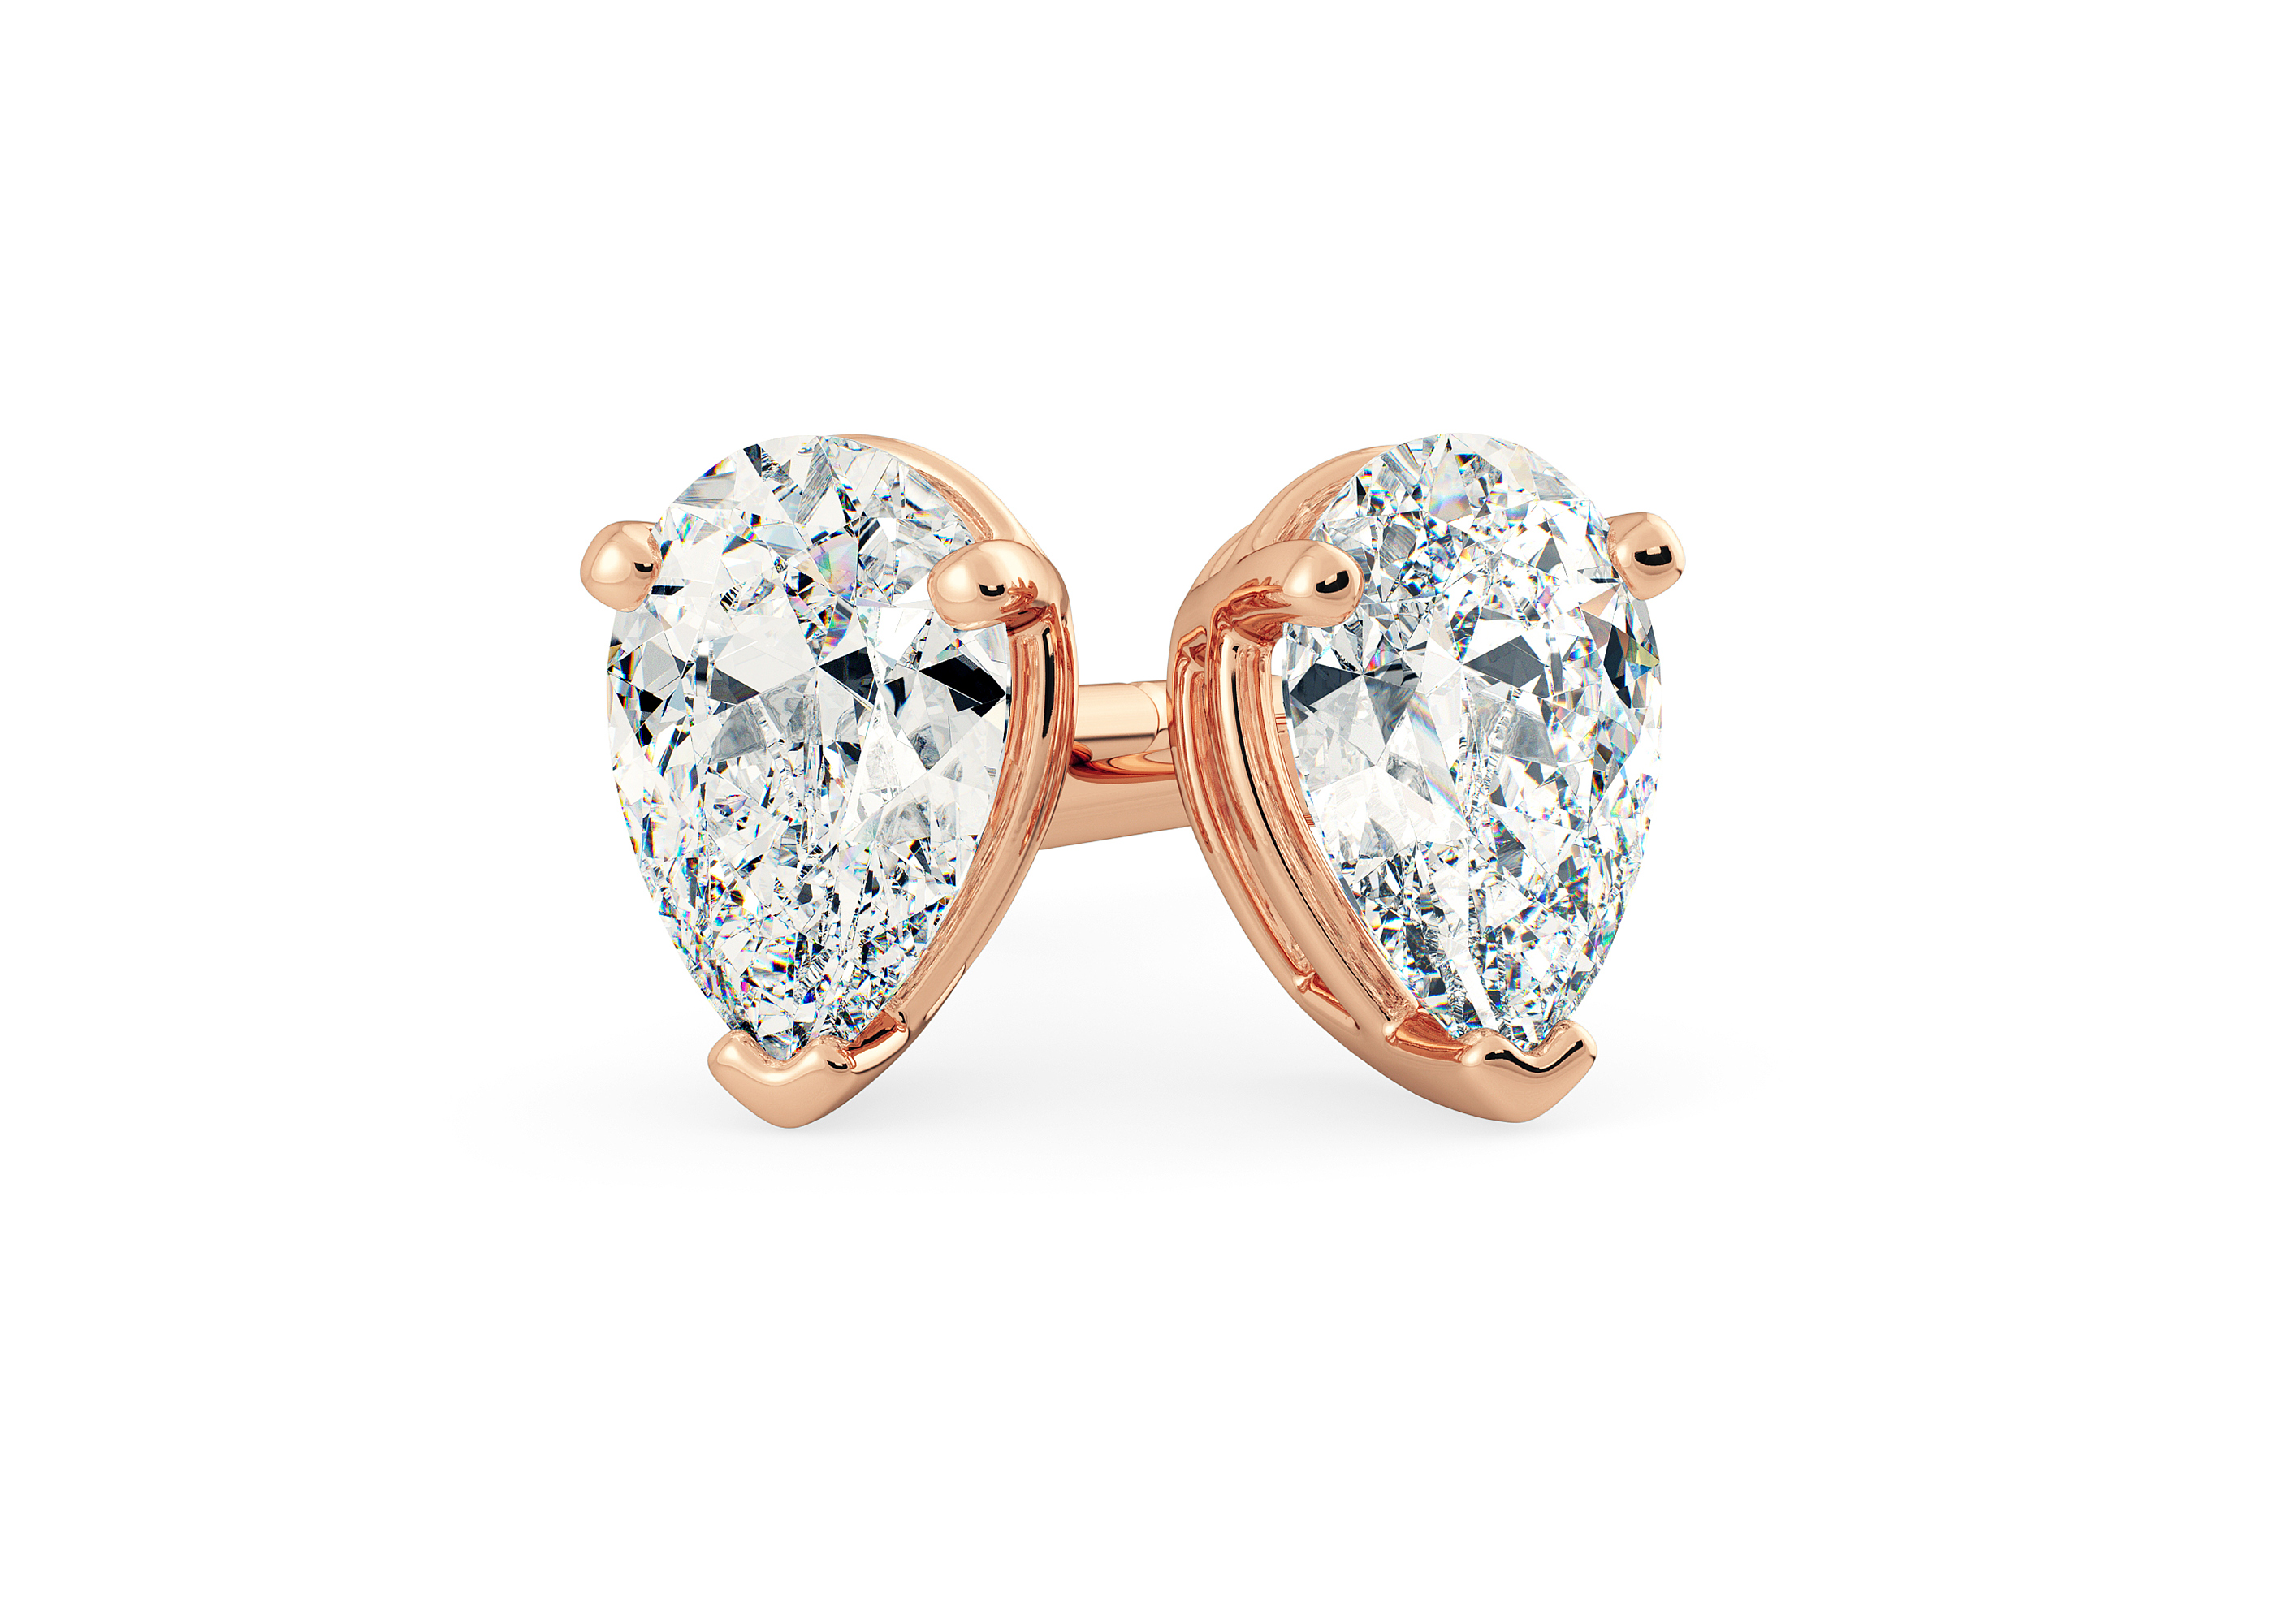 Half Carat Pear Diamond Stud Earrings in 18K Rose Gold